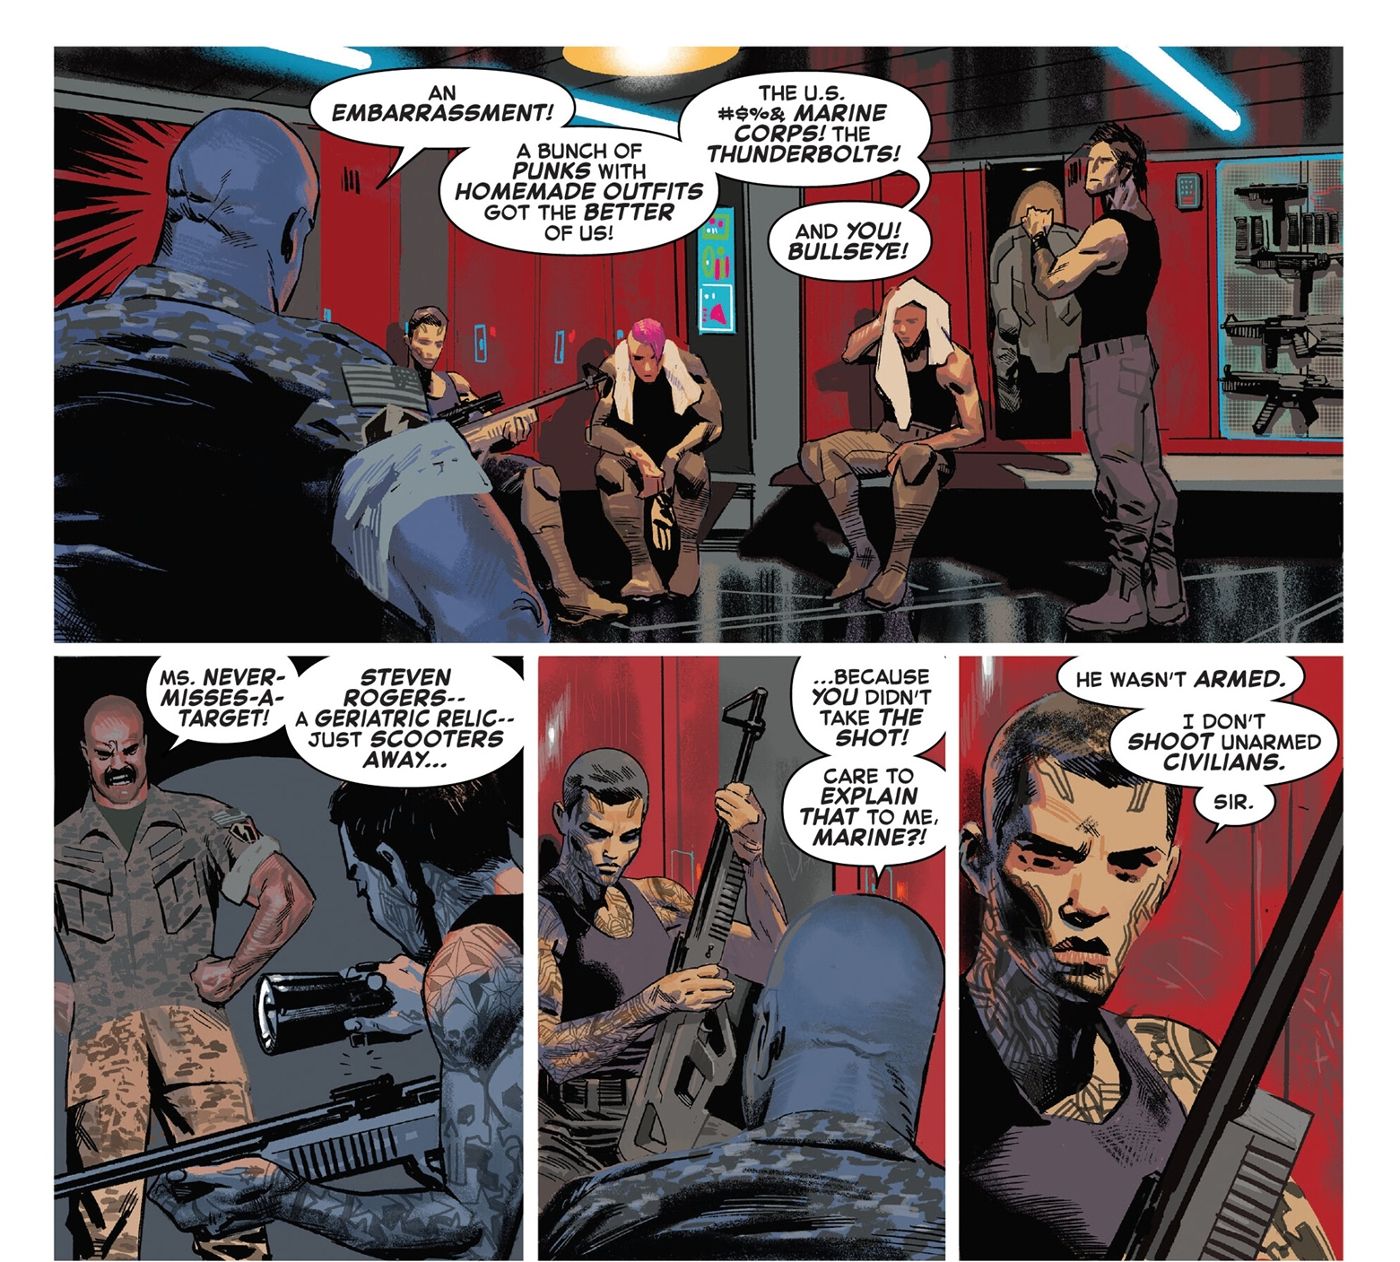 Bullseye the new Hawkeye defends not shooting Captain America